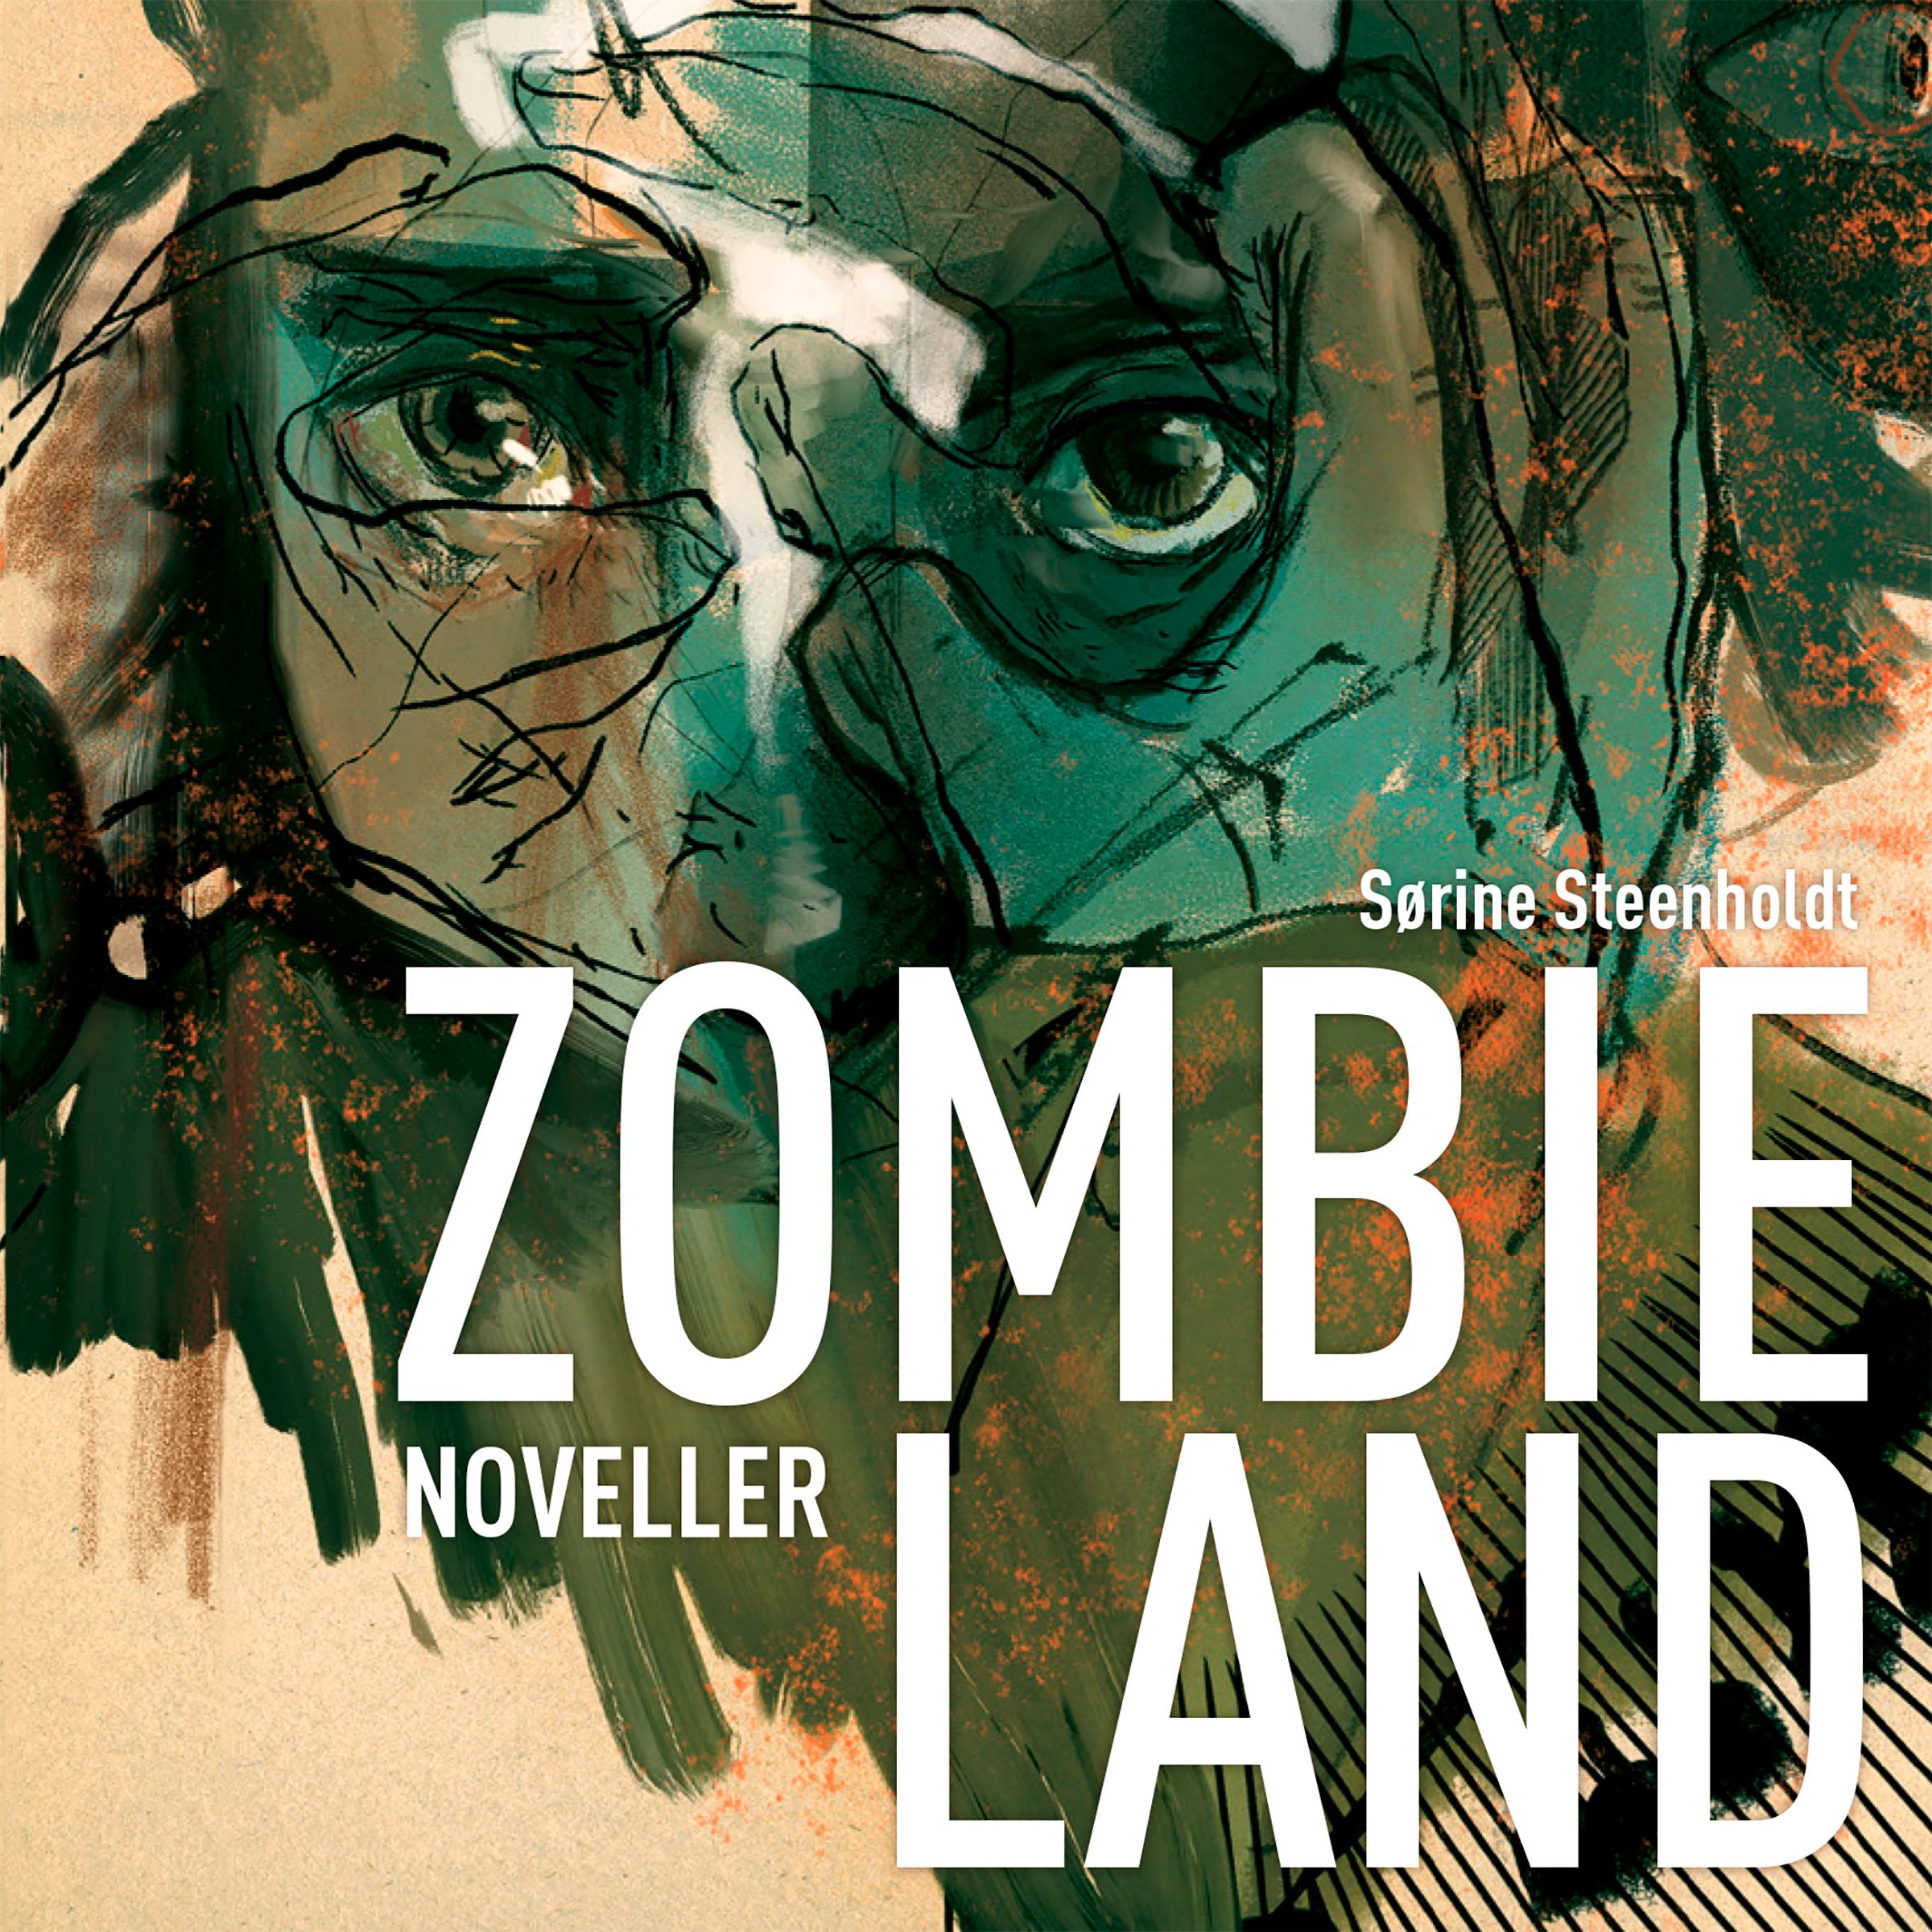 Zombieland, audiobook by Sørine Steenholdt